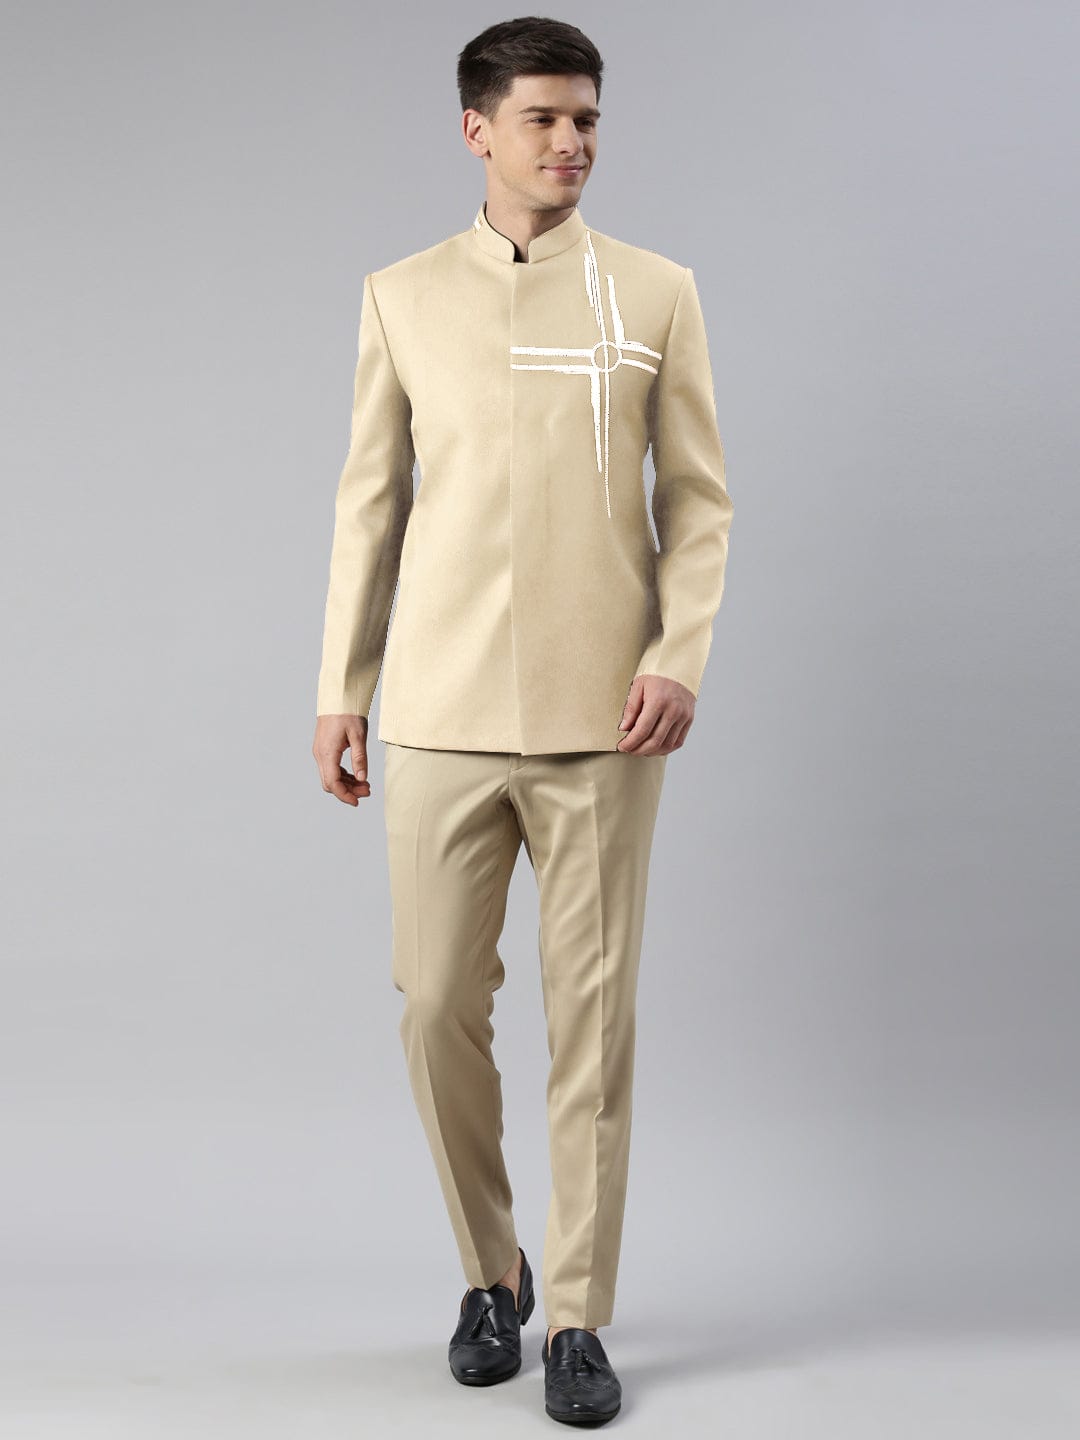 Jodhpuri Suit Beige / Cream Self Design Wedding Jodhpuri Coat pant Suit  Groom Dhula Prince Jodhpuri | Wedding suits men, Coat pant, Self design